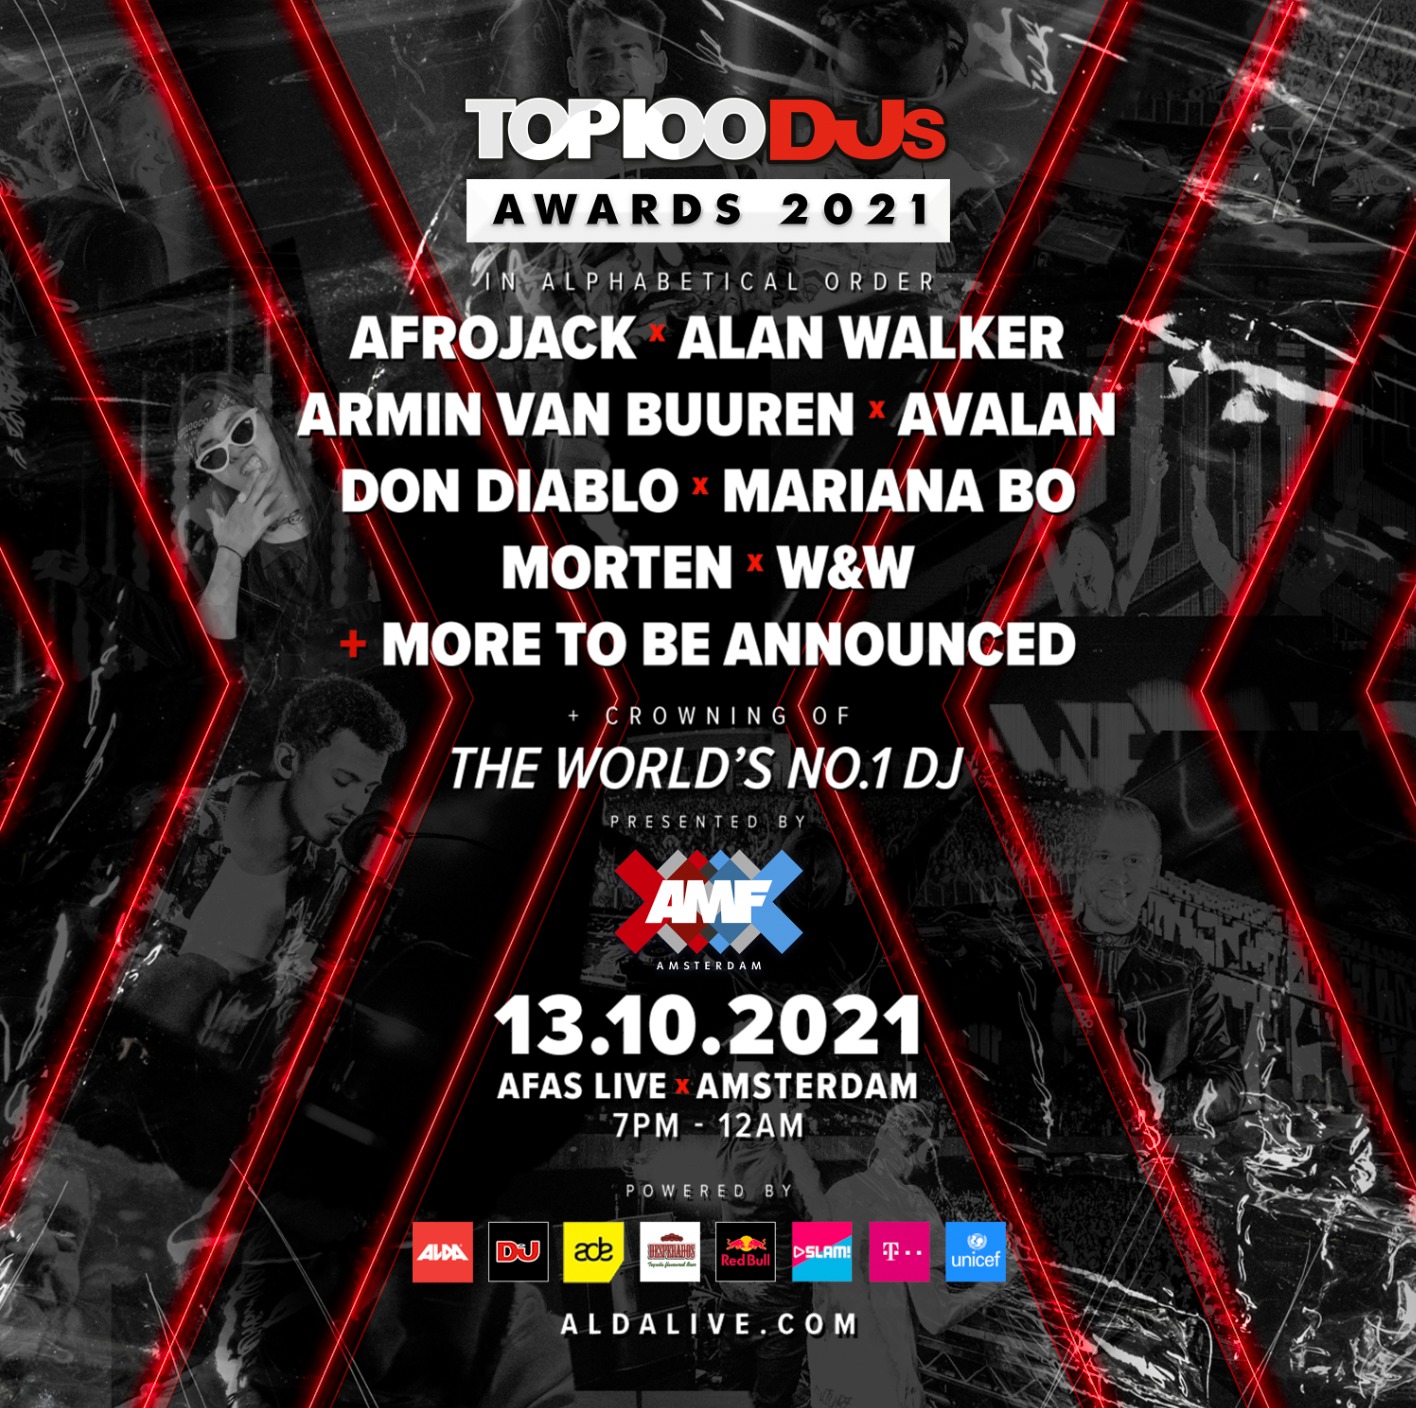 Overskyet Virus æstetisk DJ MAG TOP 100 DJS 2021 WINNER ANNOUNCED NEXT WEEK – Pitch The Tempo